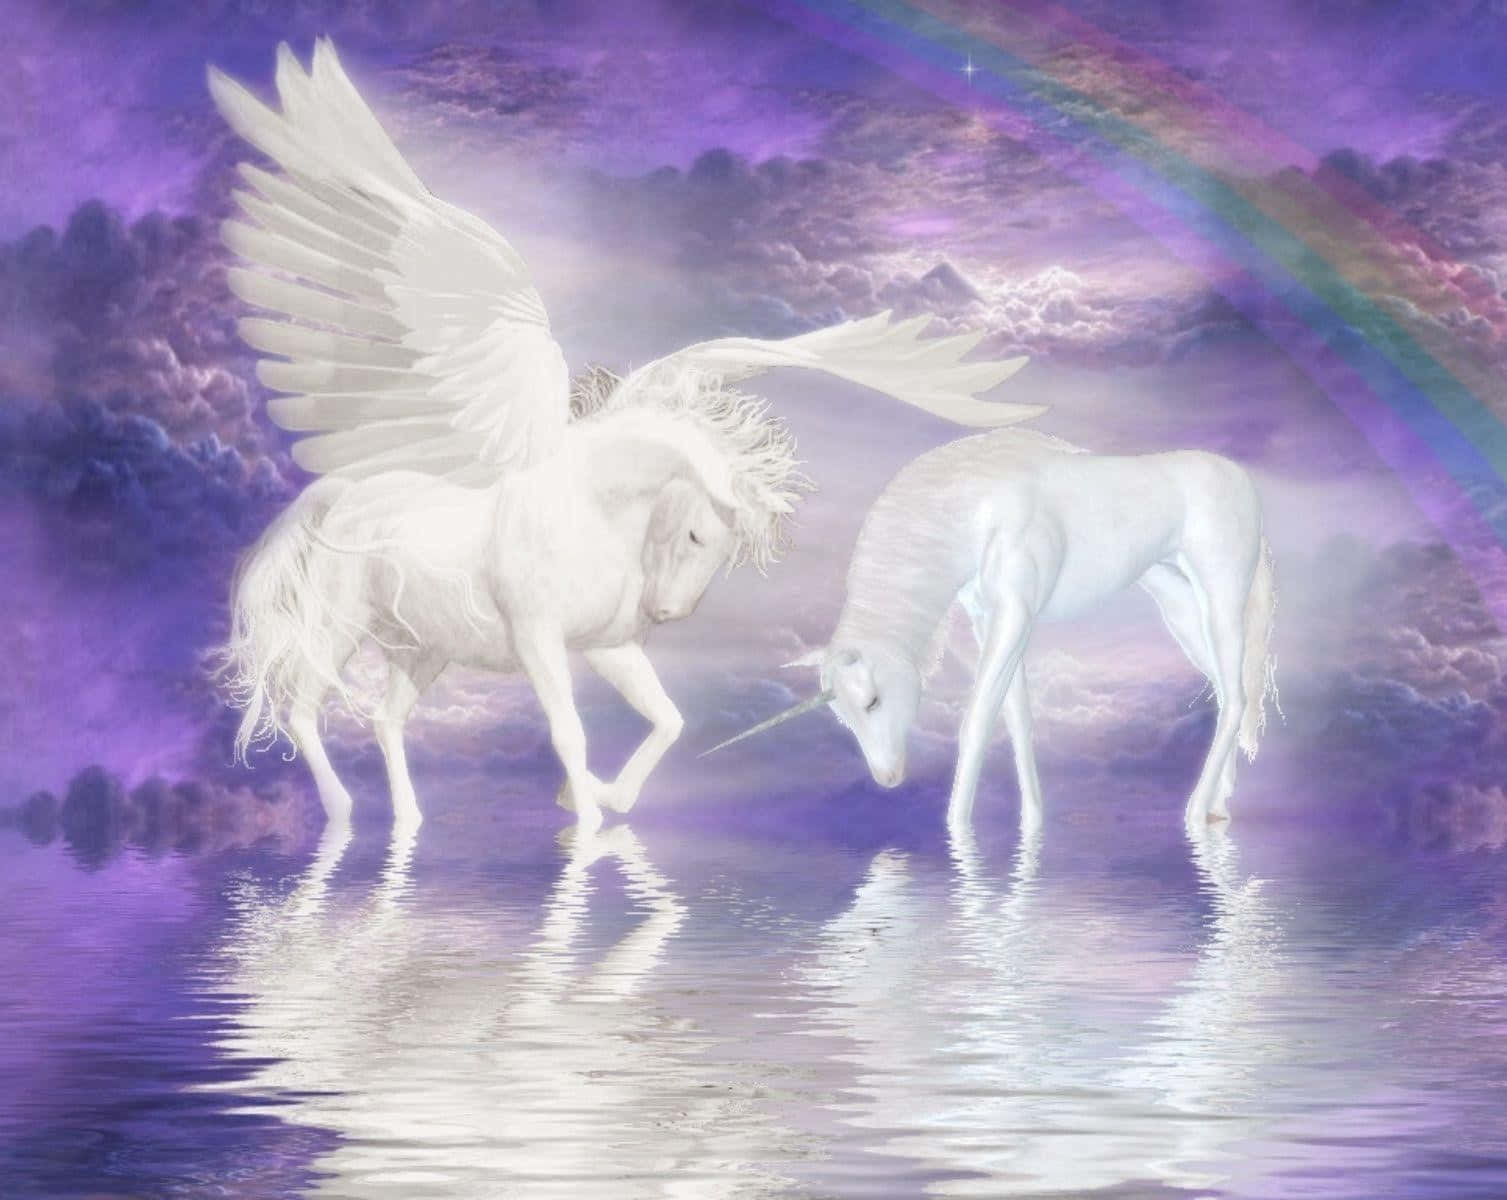 Magical 3D Unicorn in a Fantasy World Wallpaper